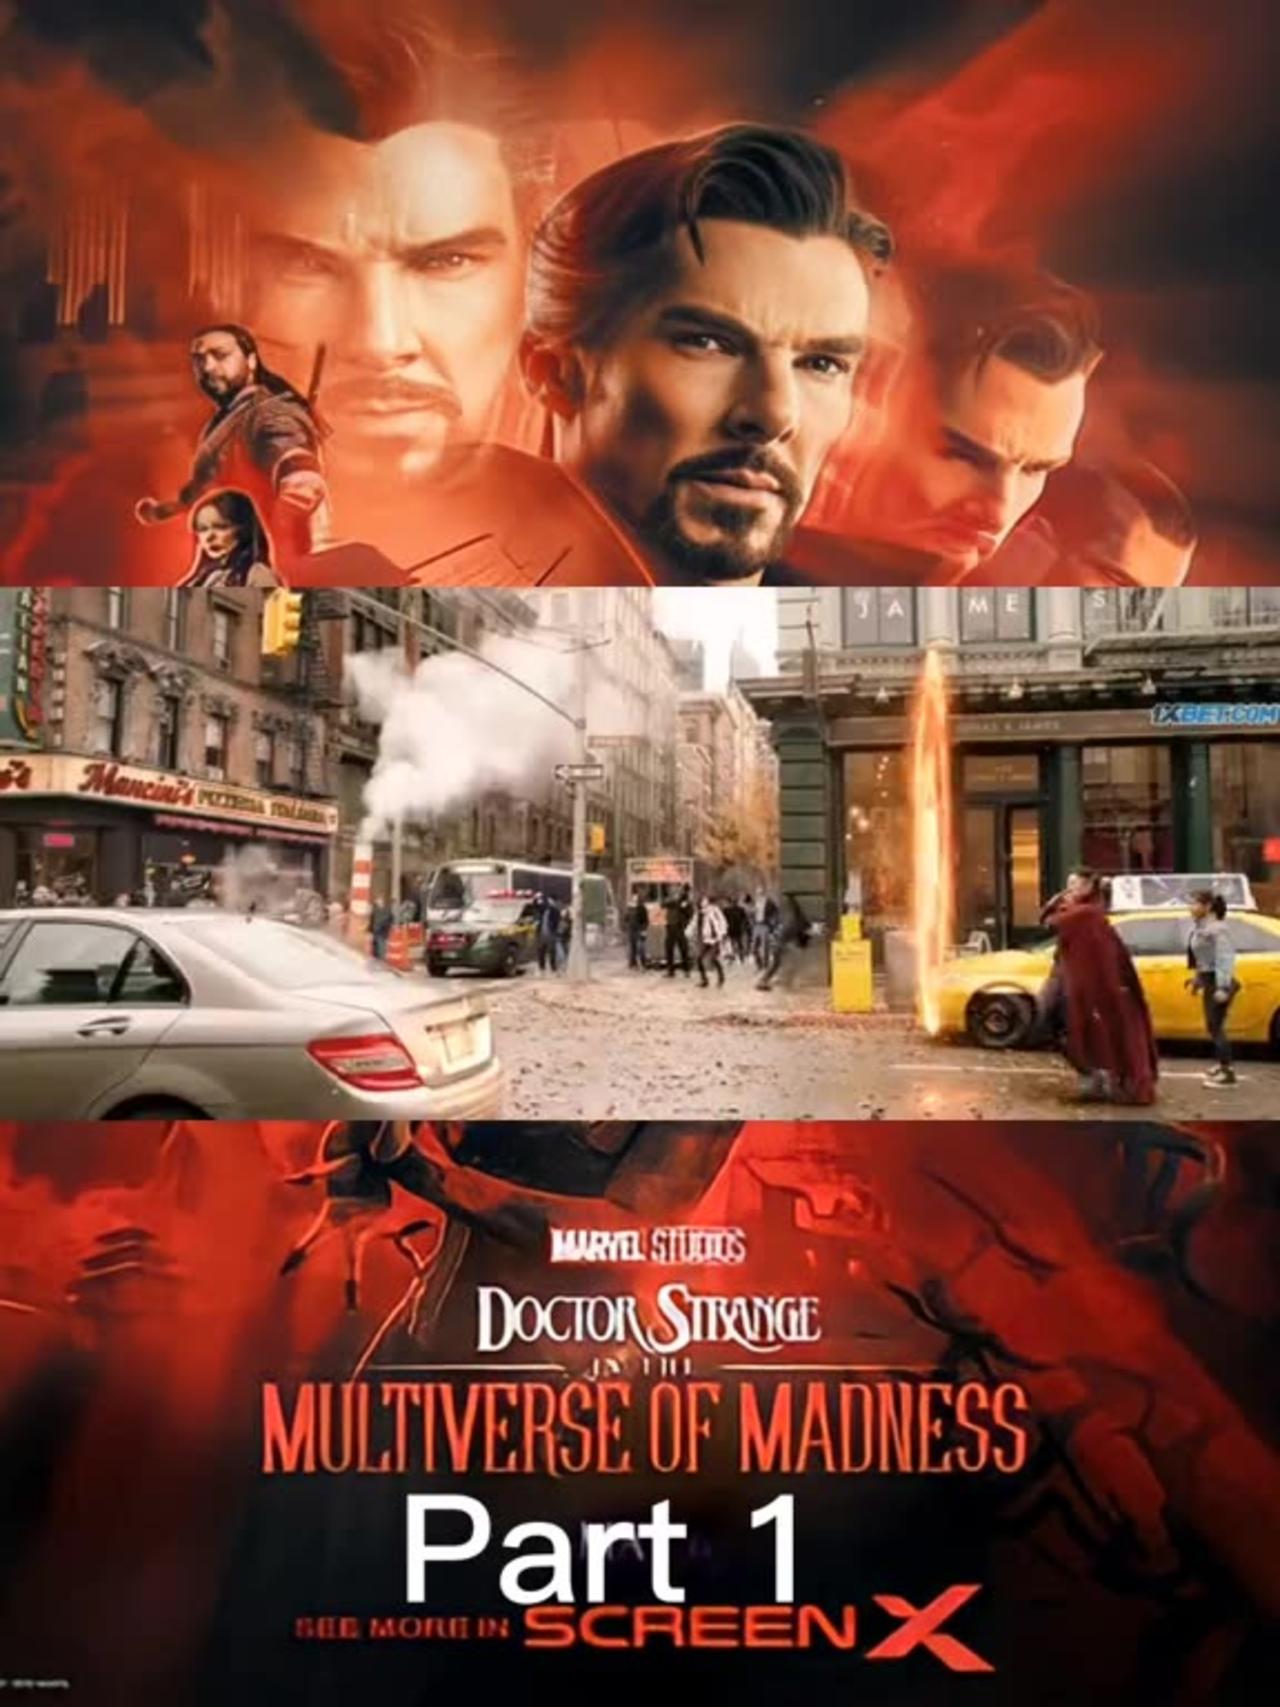 #Doctor Strange in the MCU #Multiverse of Madness #Scarlet Witch in Multiverse #Multiverse Theory